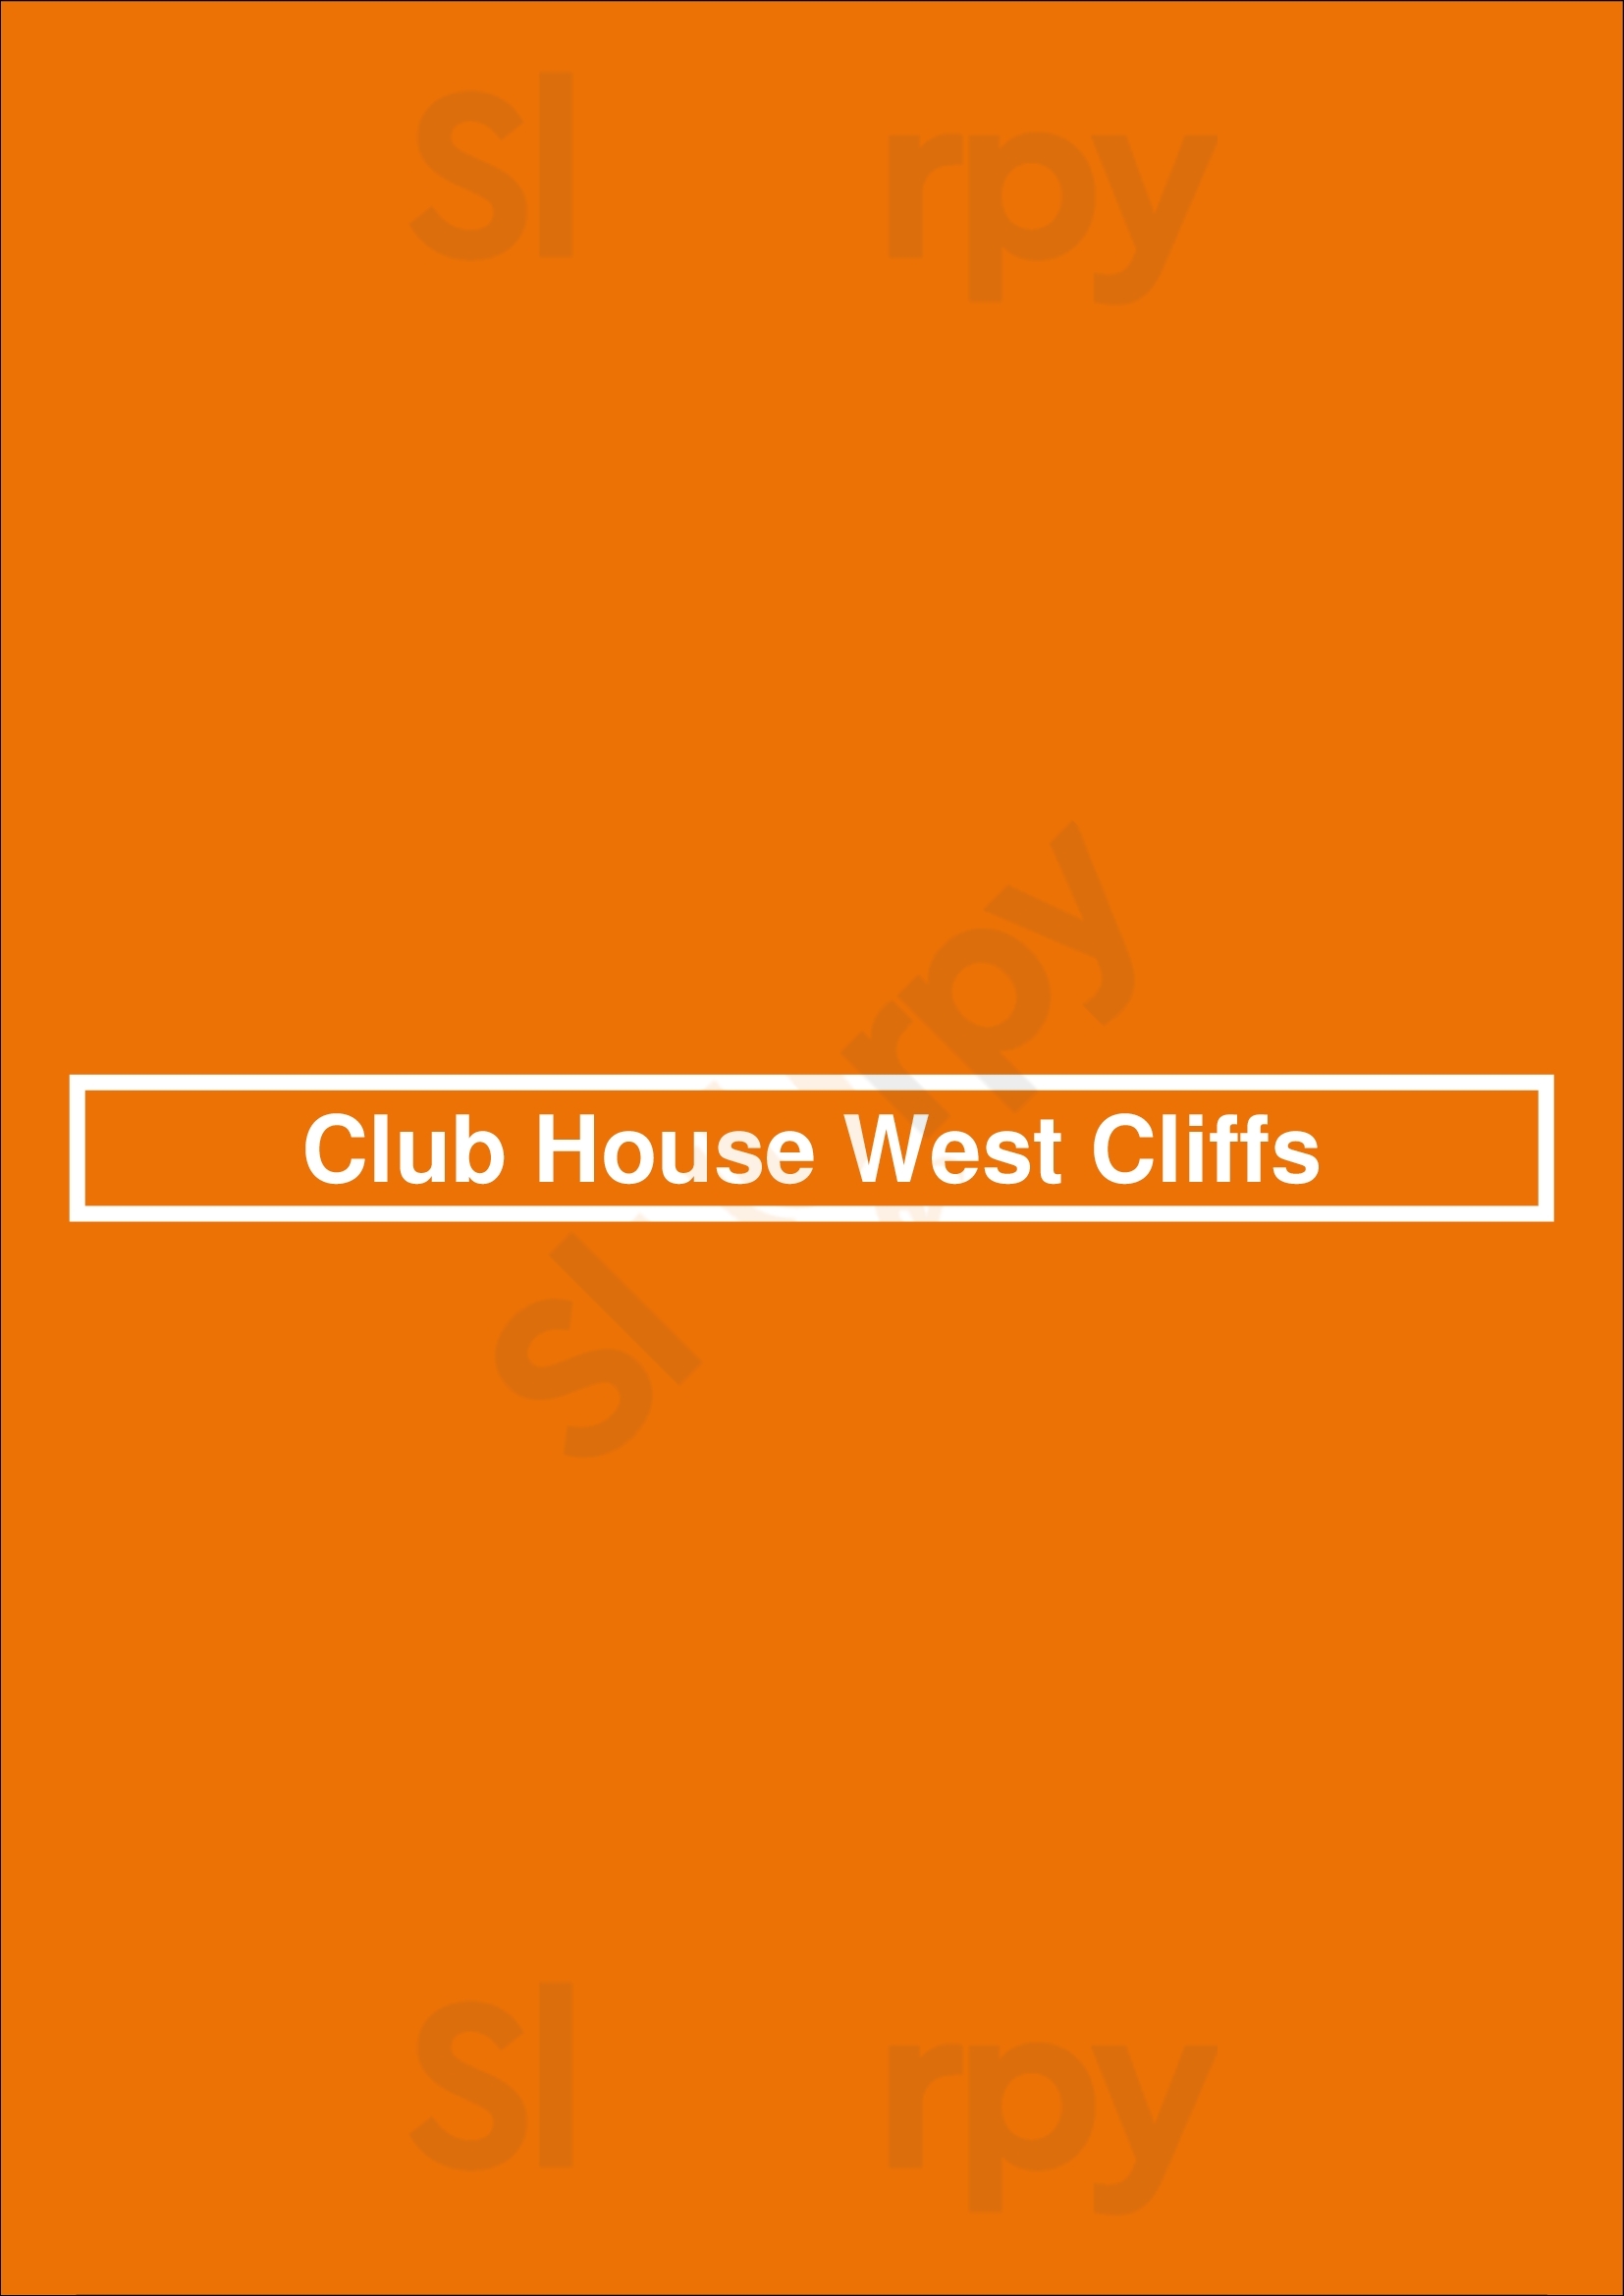 Club House West Cliffs Óbidos Menu - 1